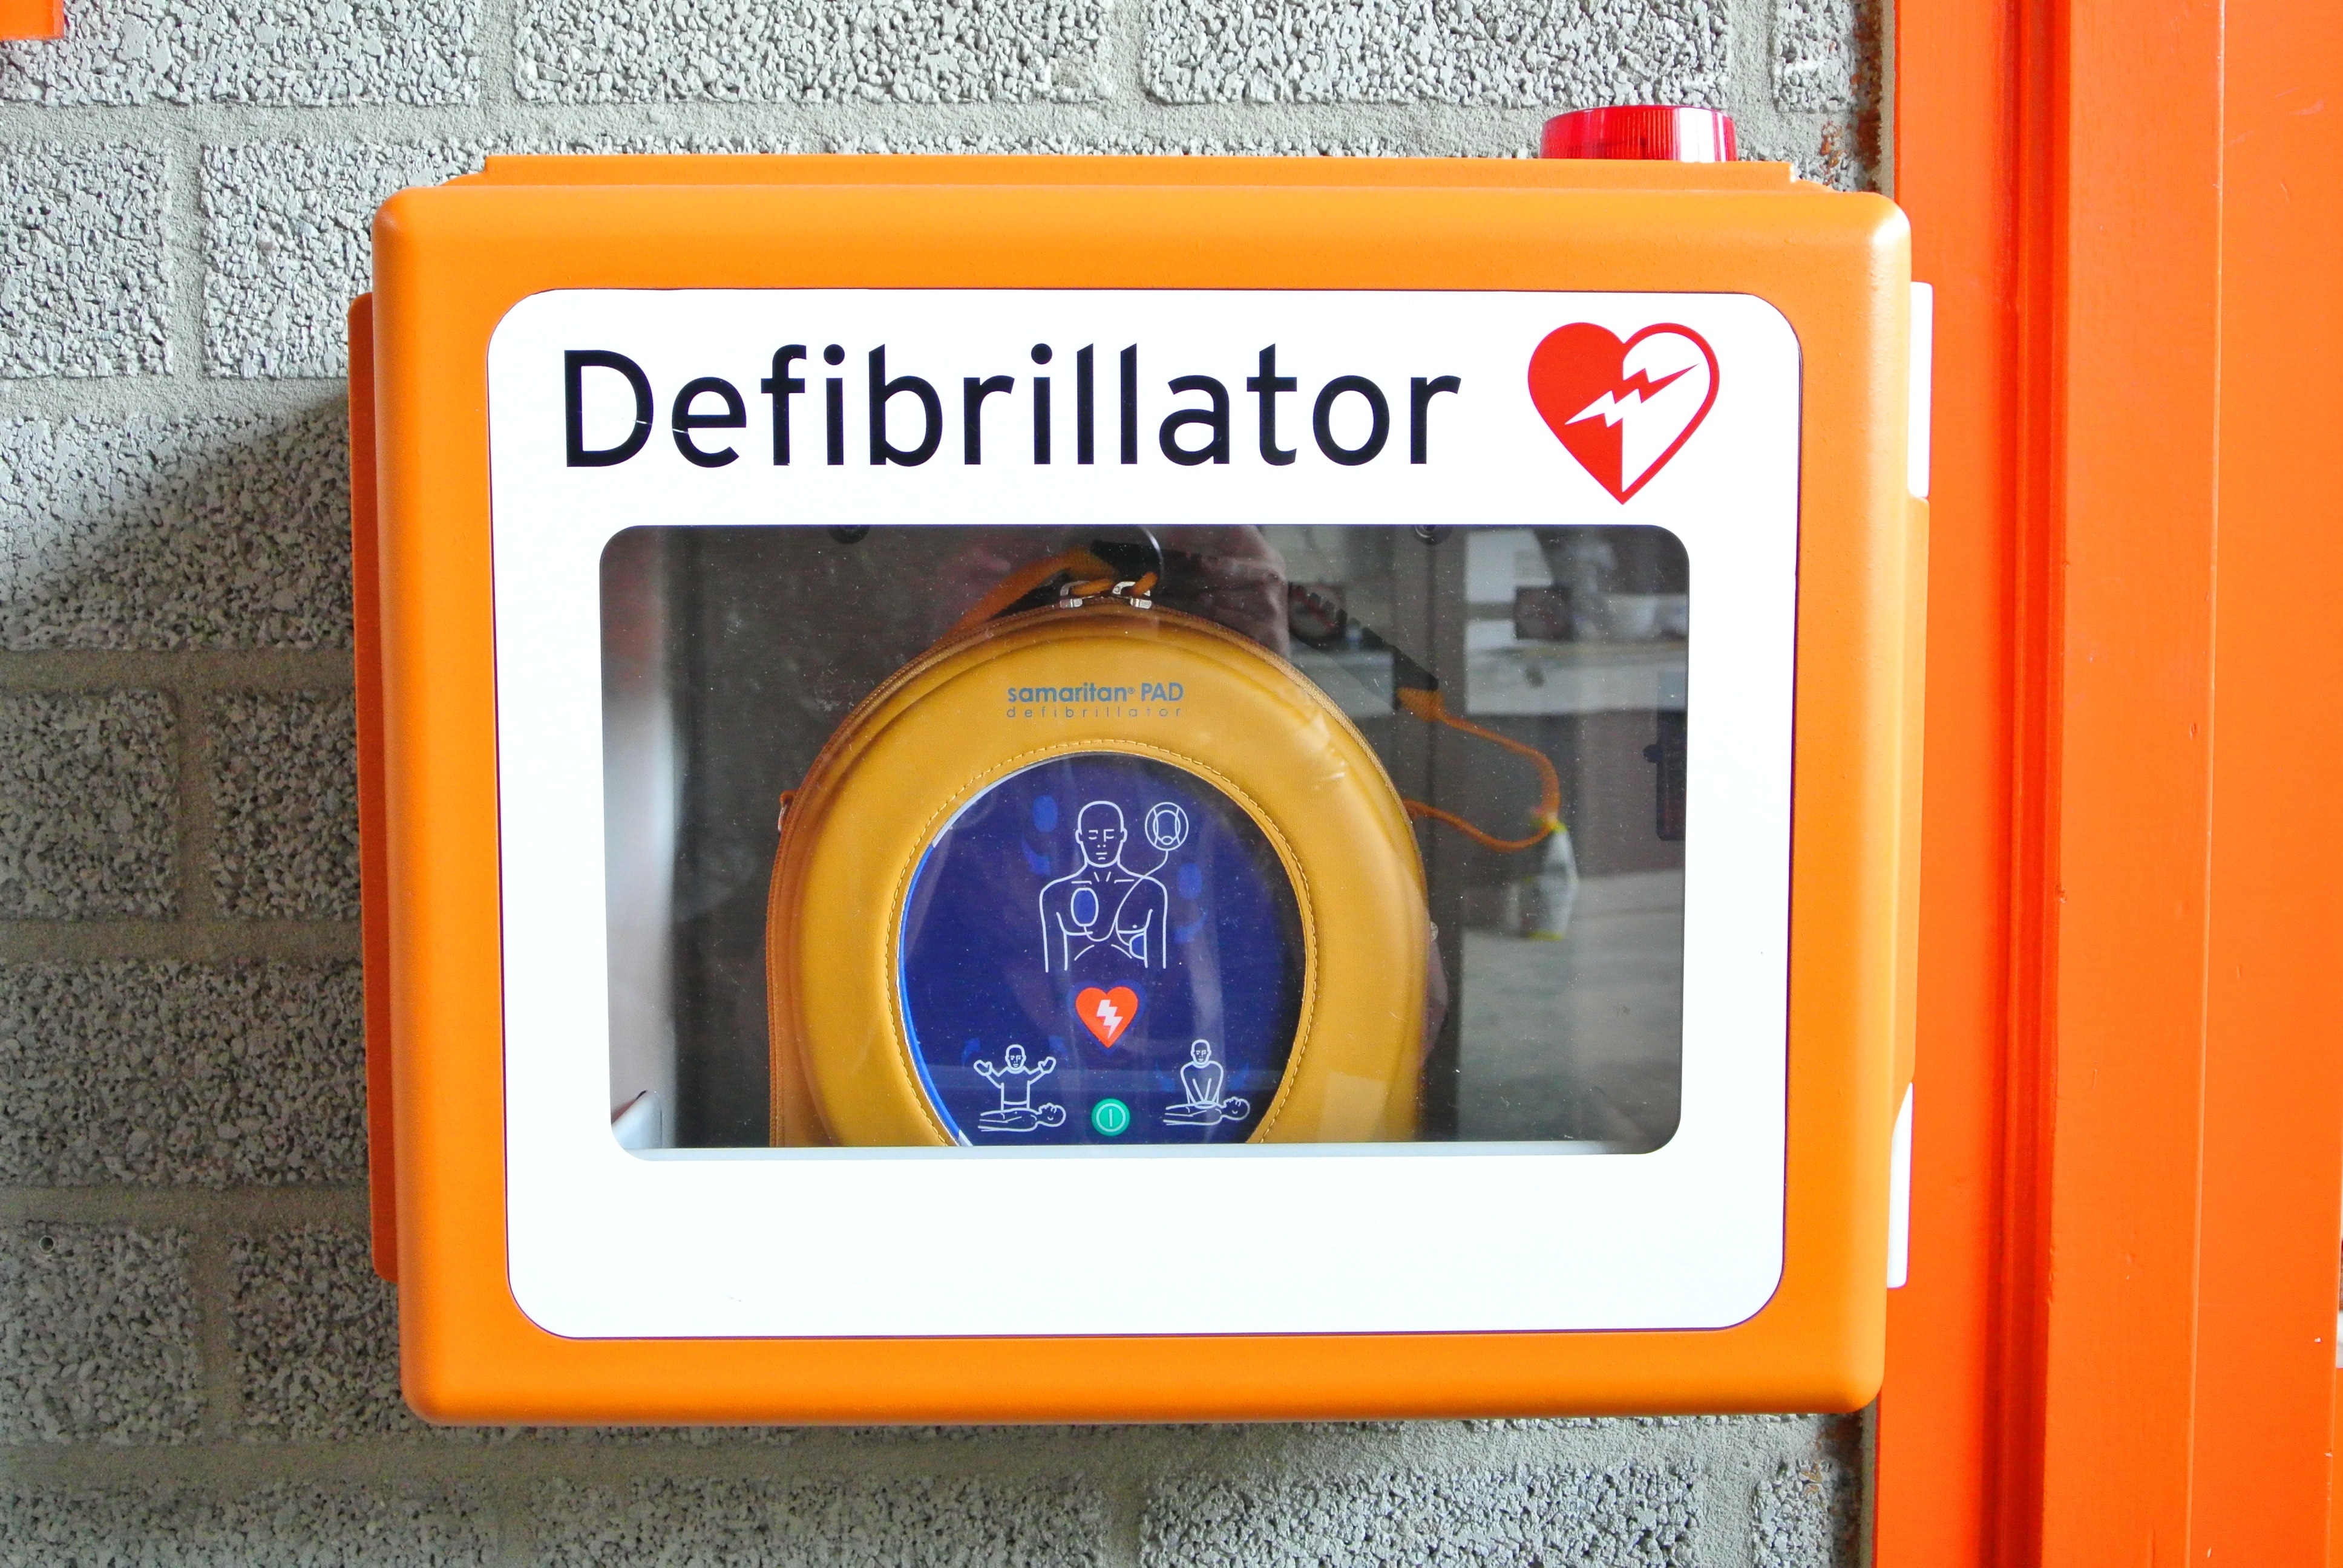 defibrillator box